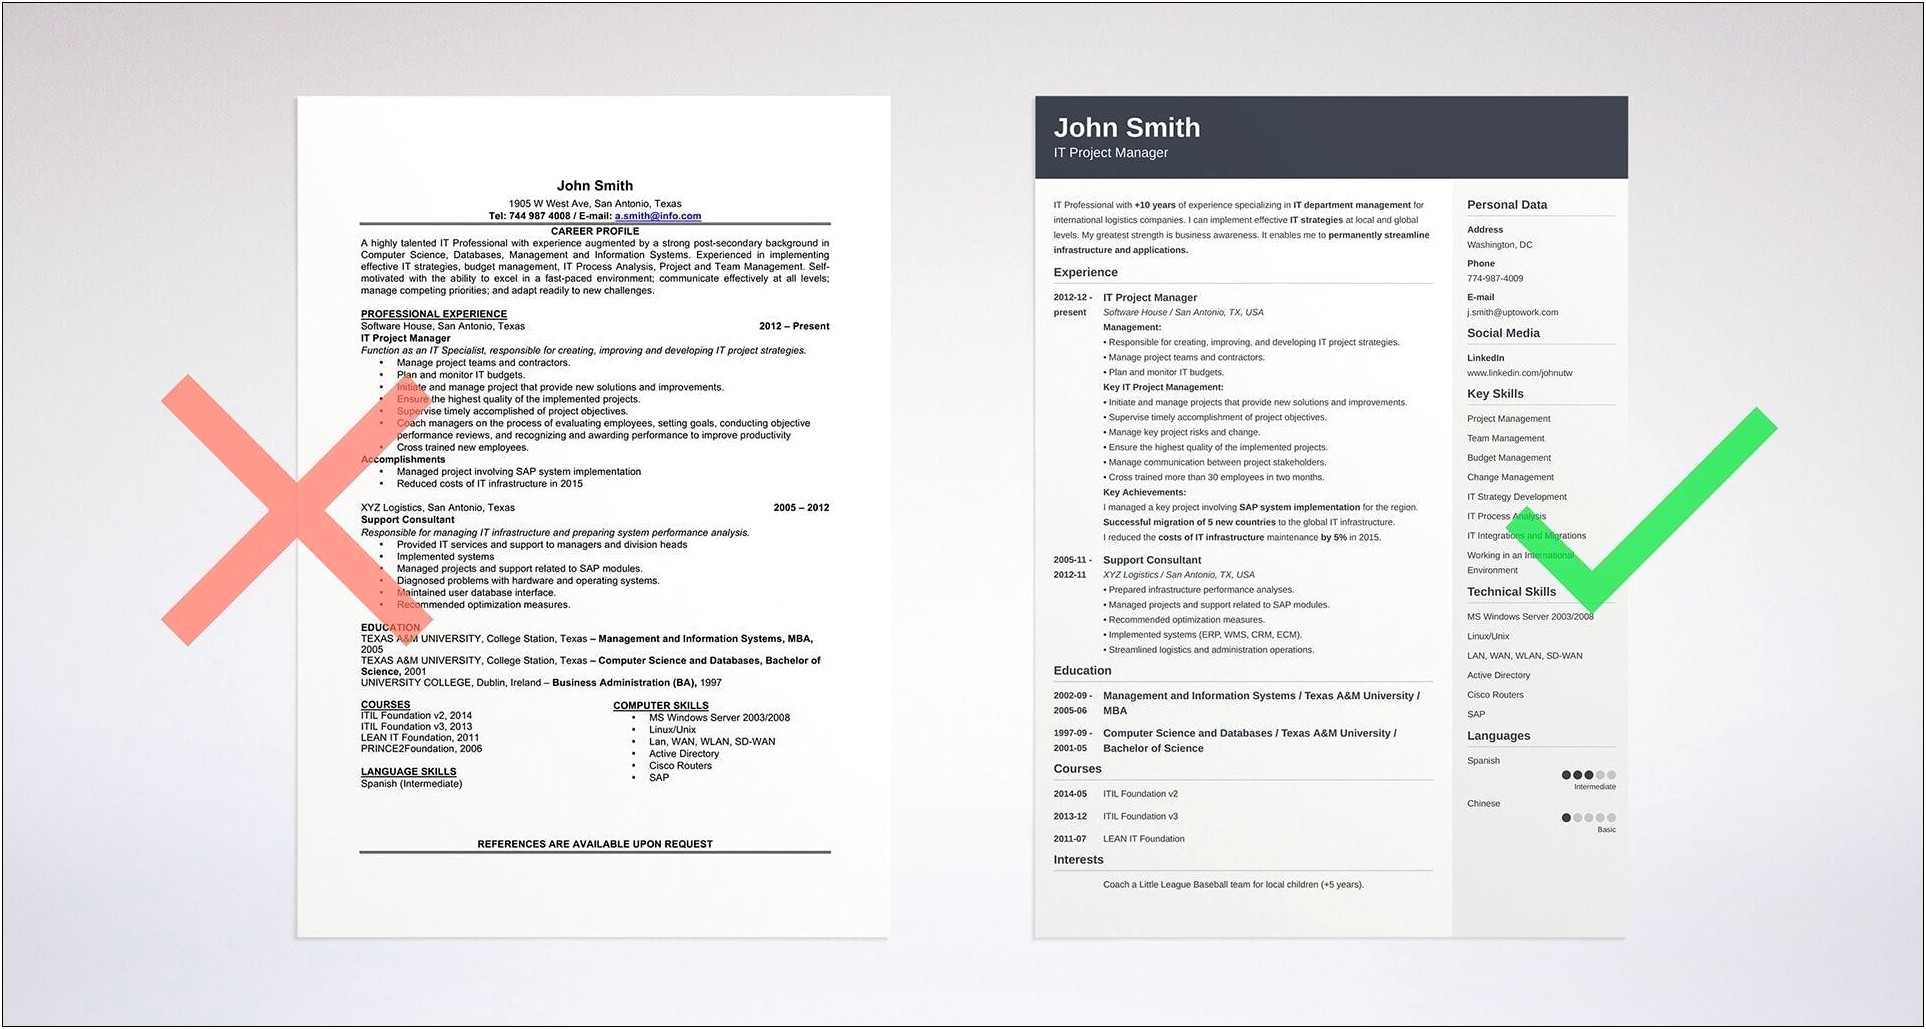 Resume Objective Samples For Entry Level Jobs